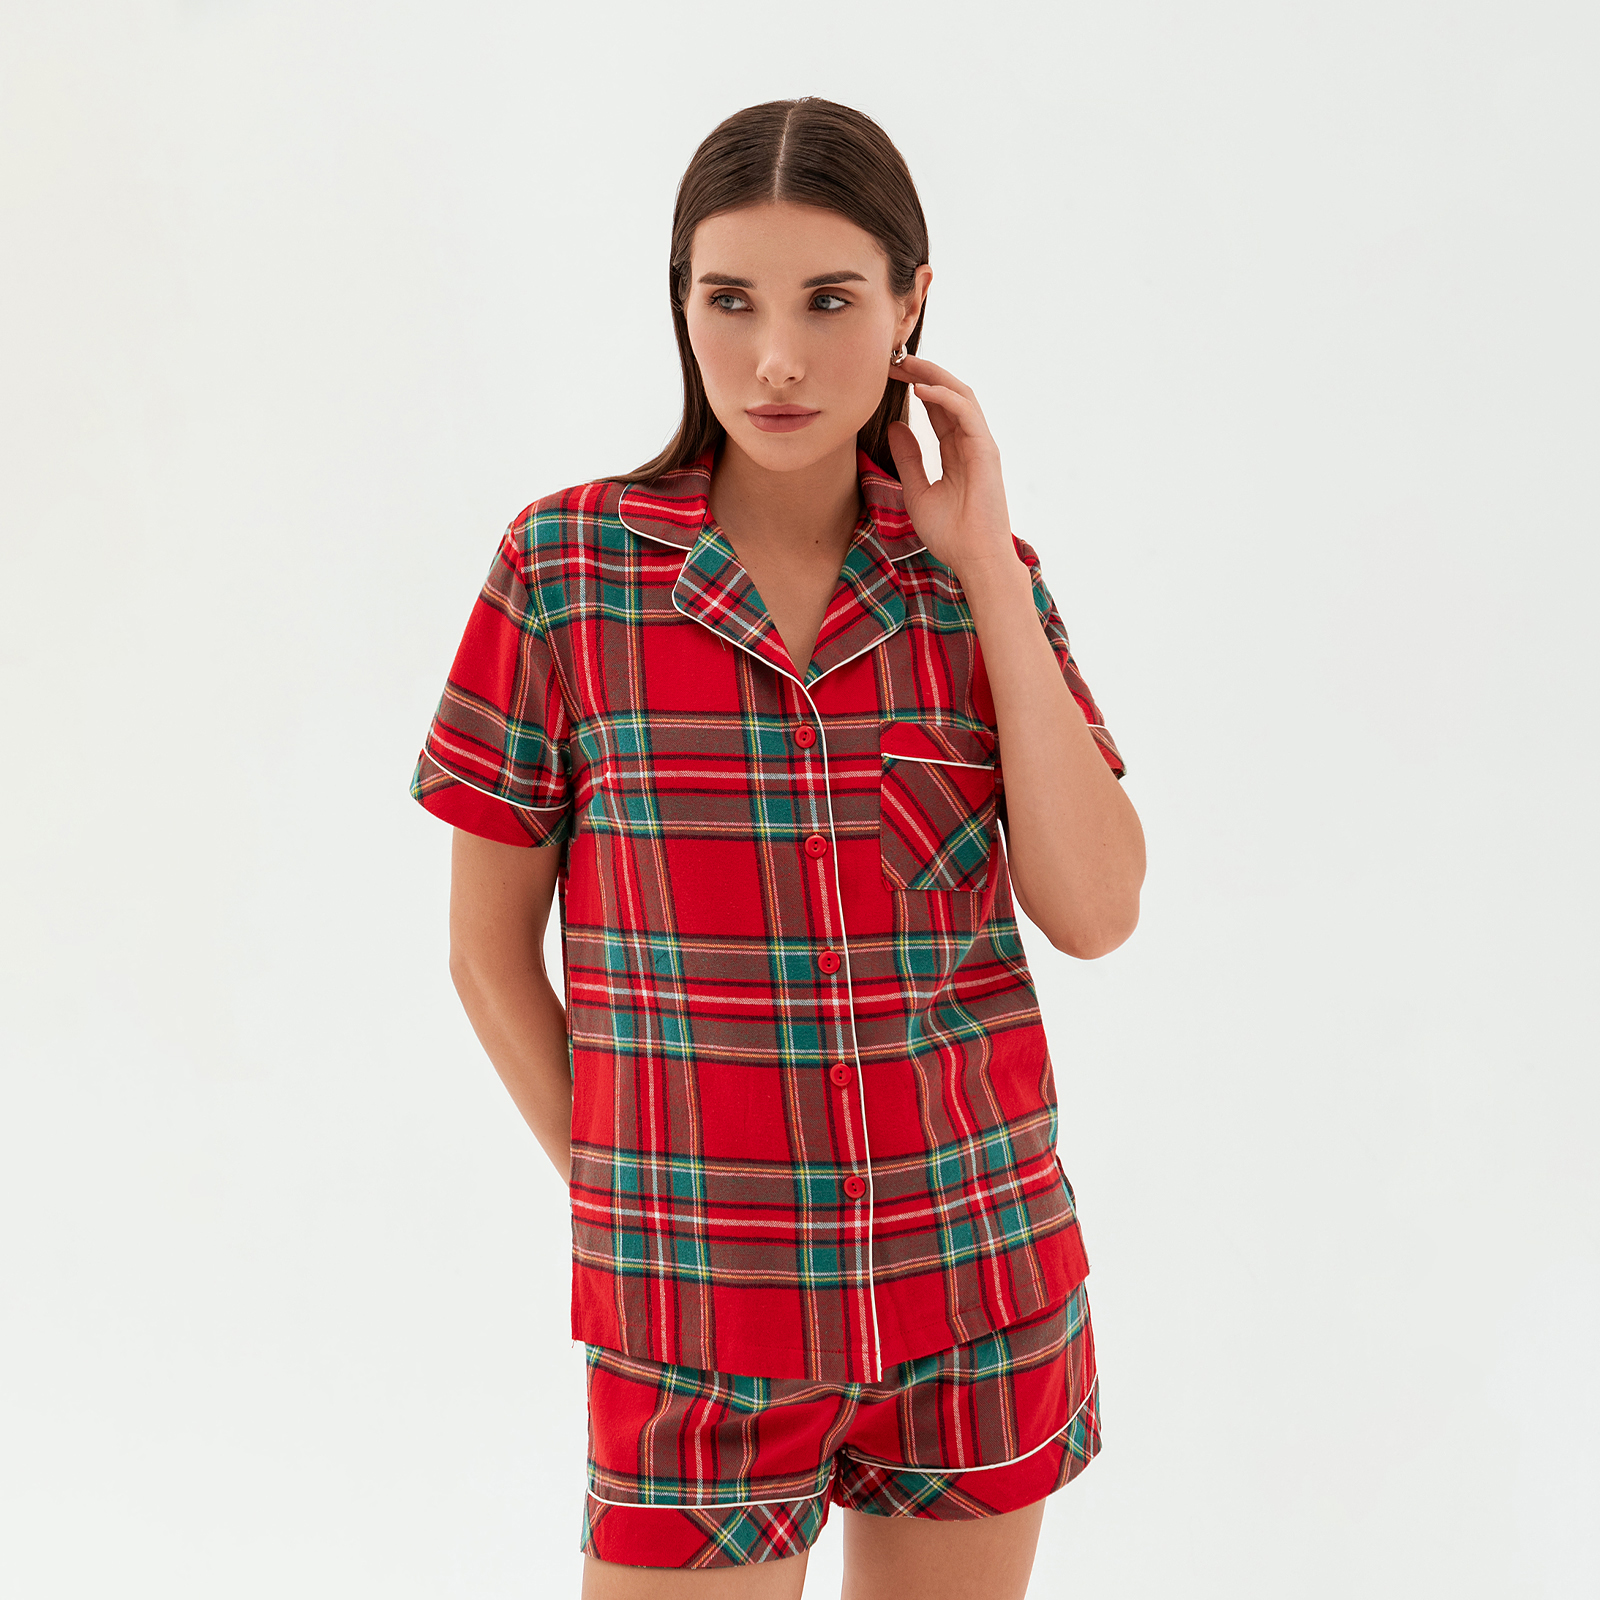 Пижама Gabbia rossa II жен пижама с шортами арт 23 0098 красный р 46